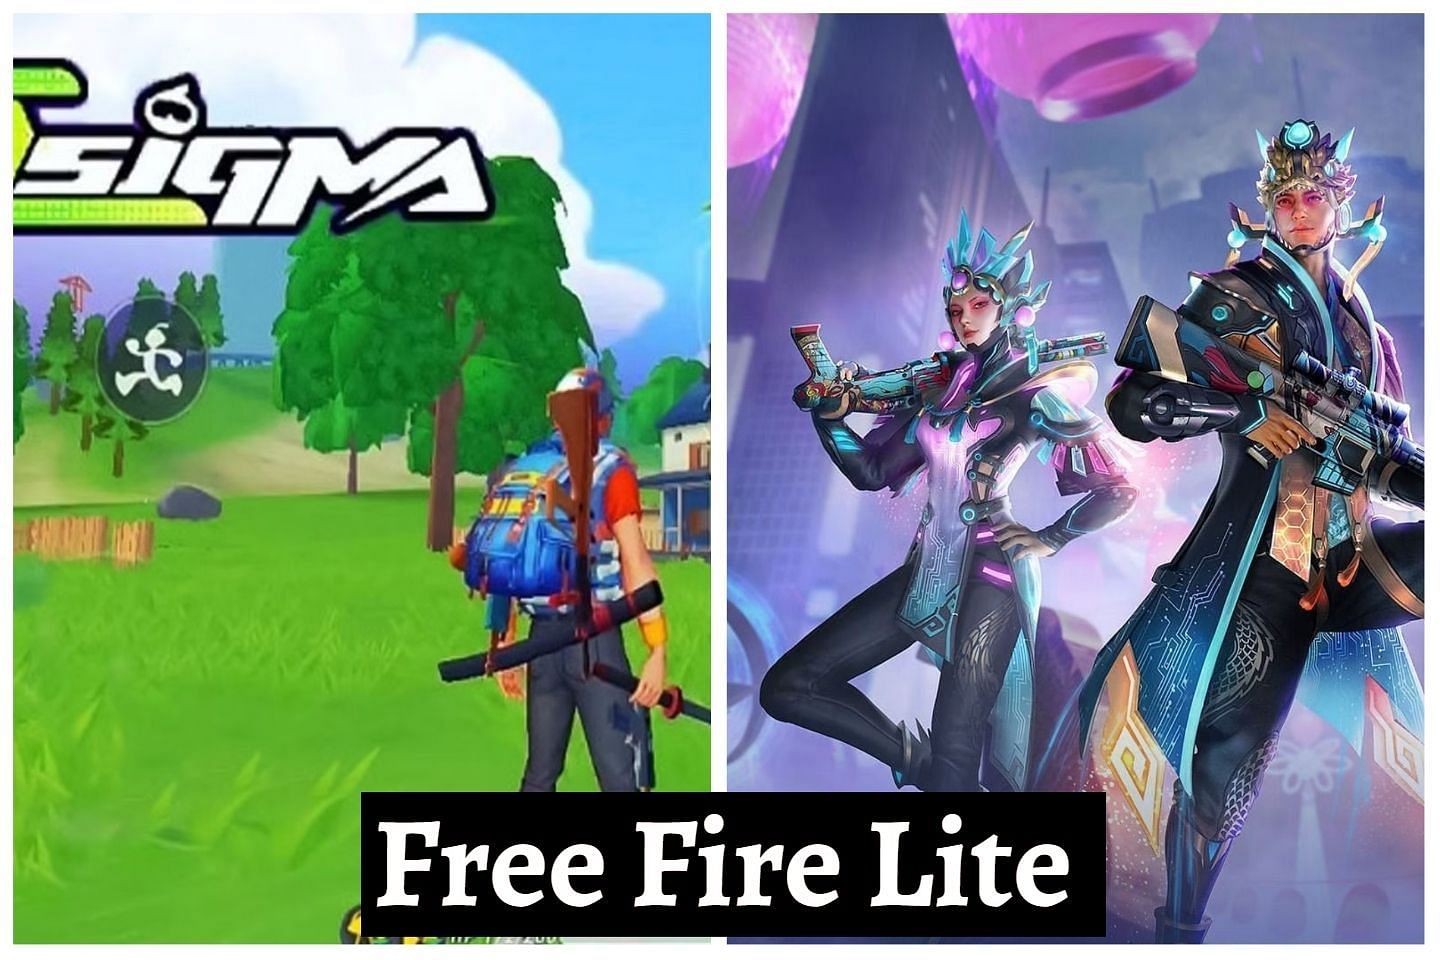 Free Fire Lite (Image via Garena)